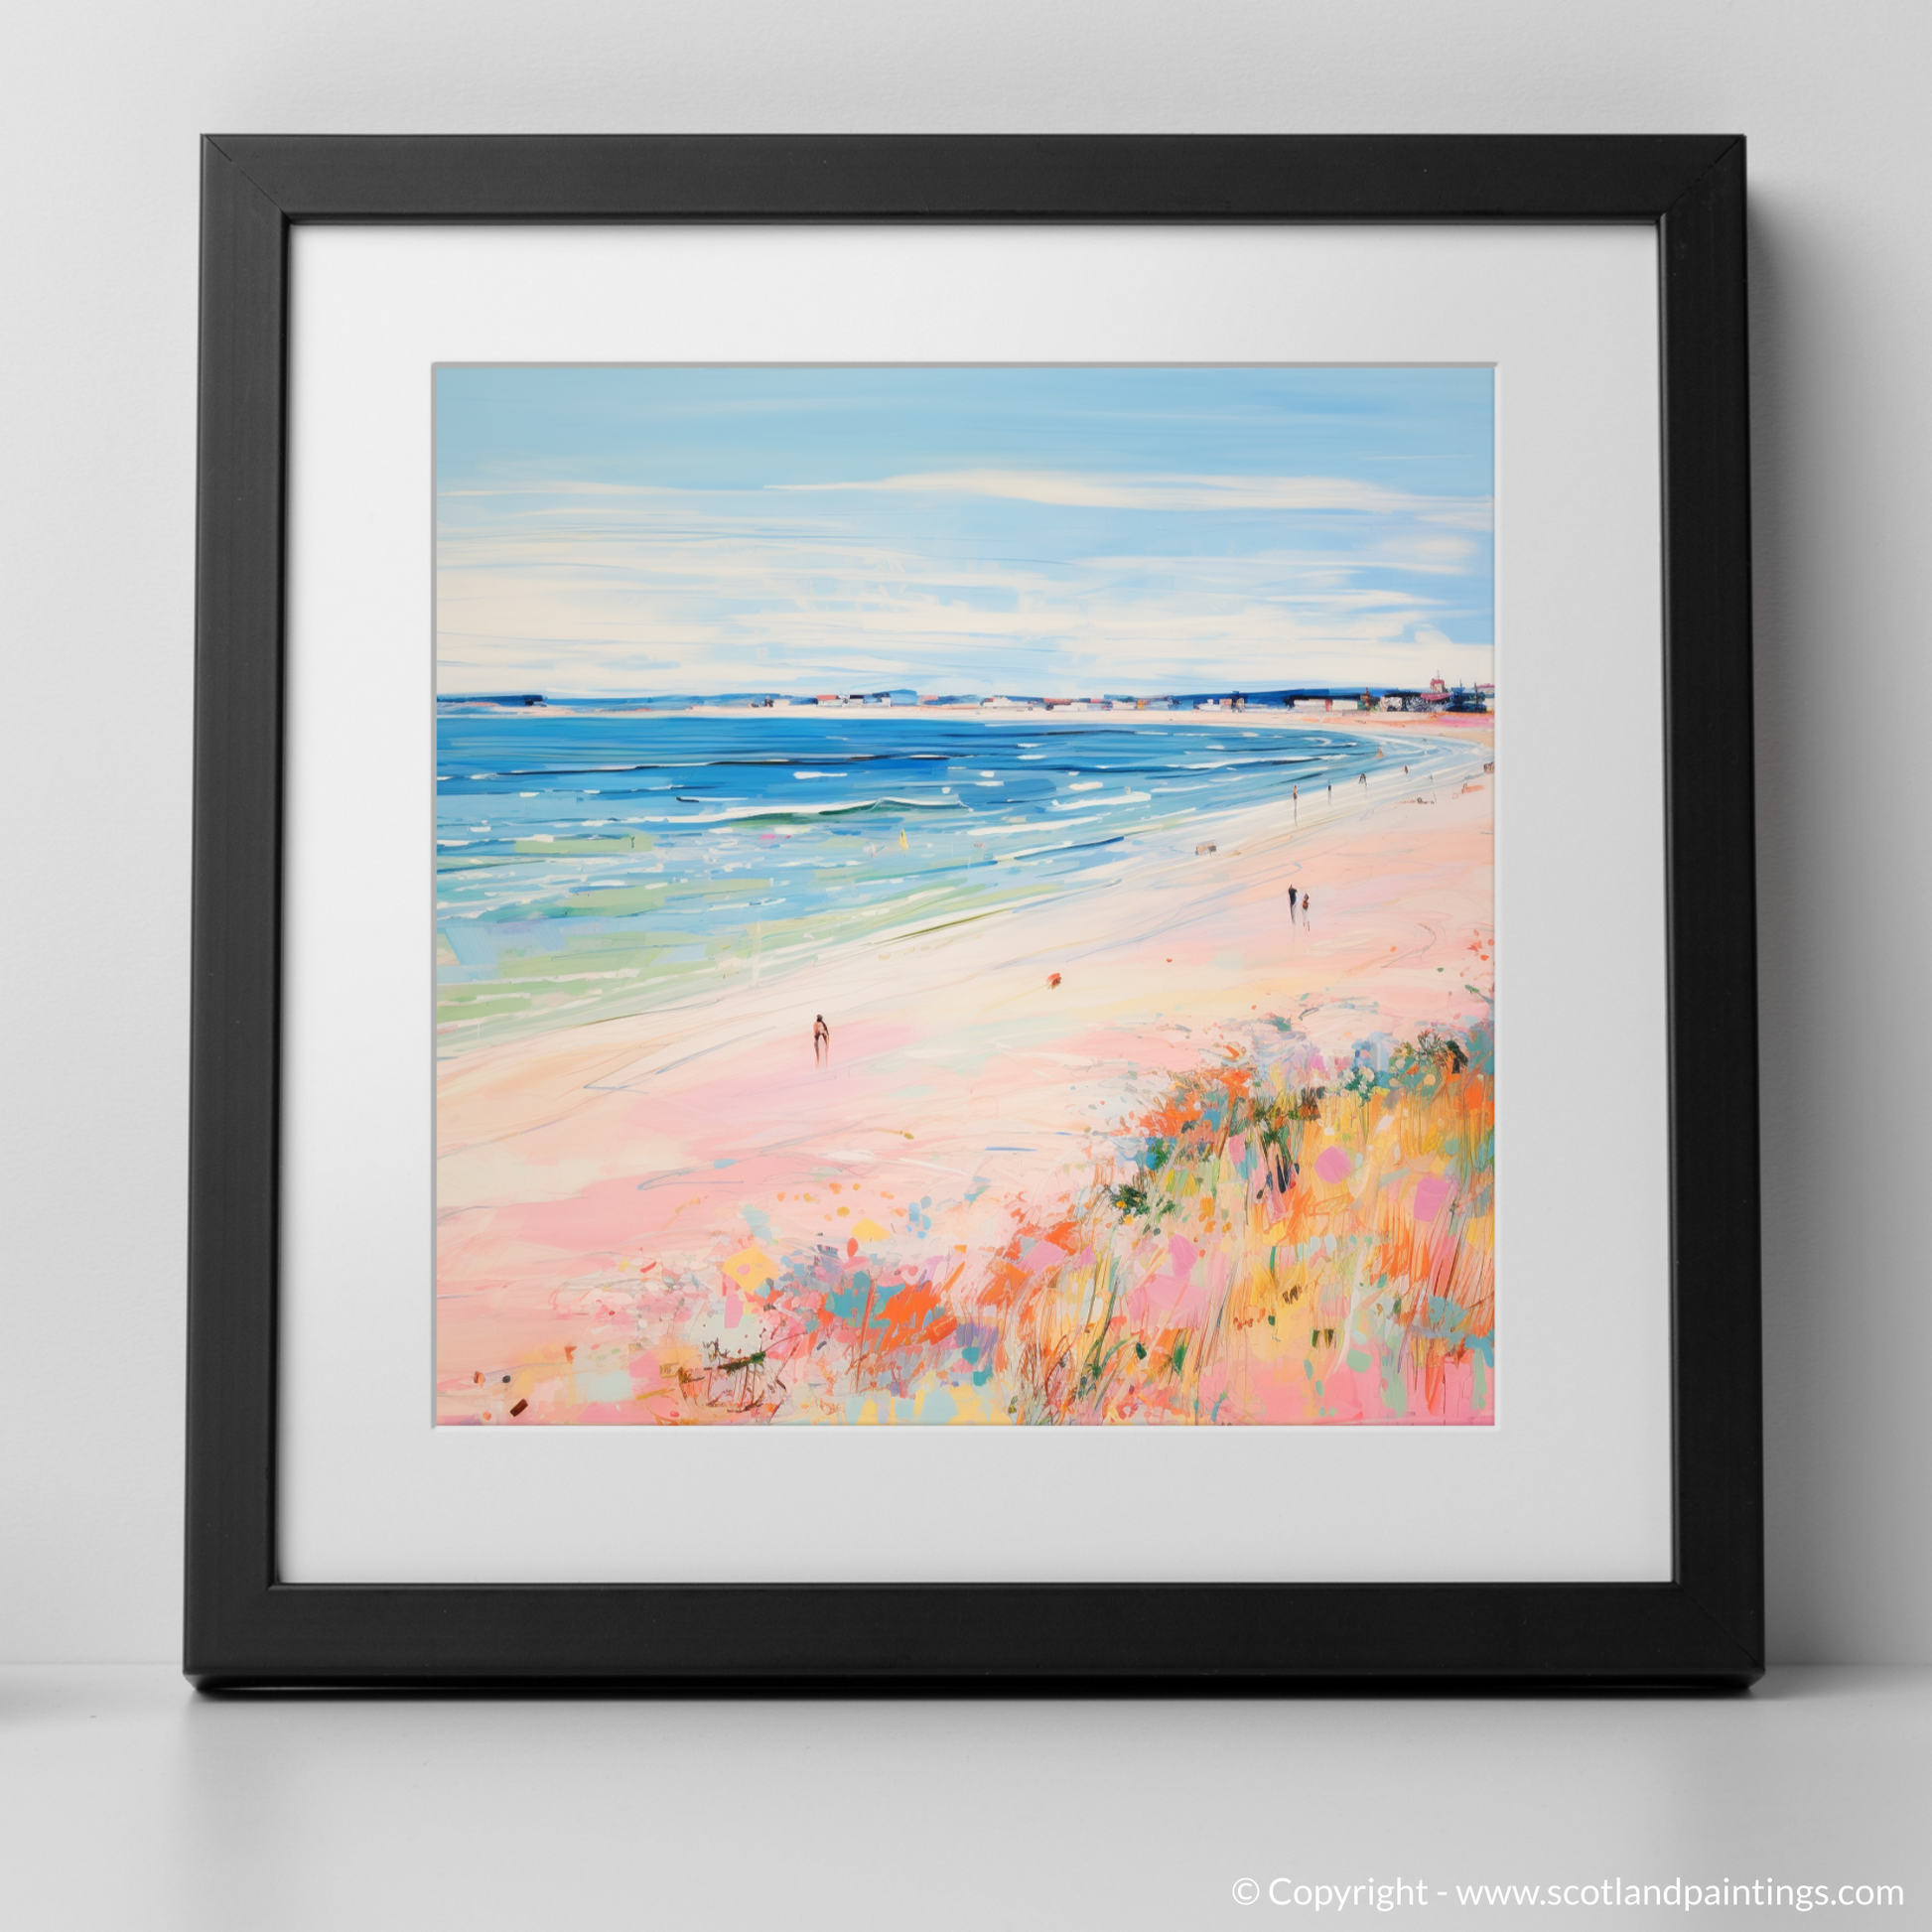 Art Print of Nairn Beach, Nairn in summer with a black frame